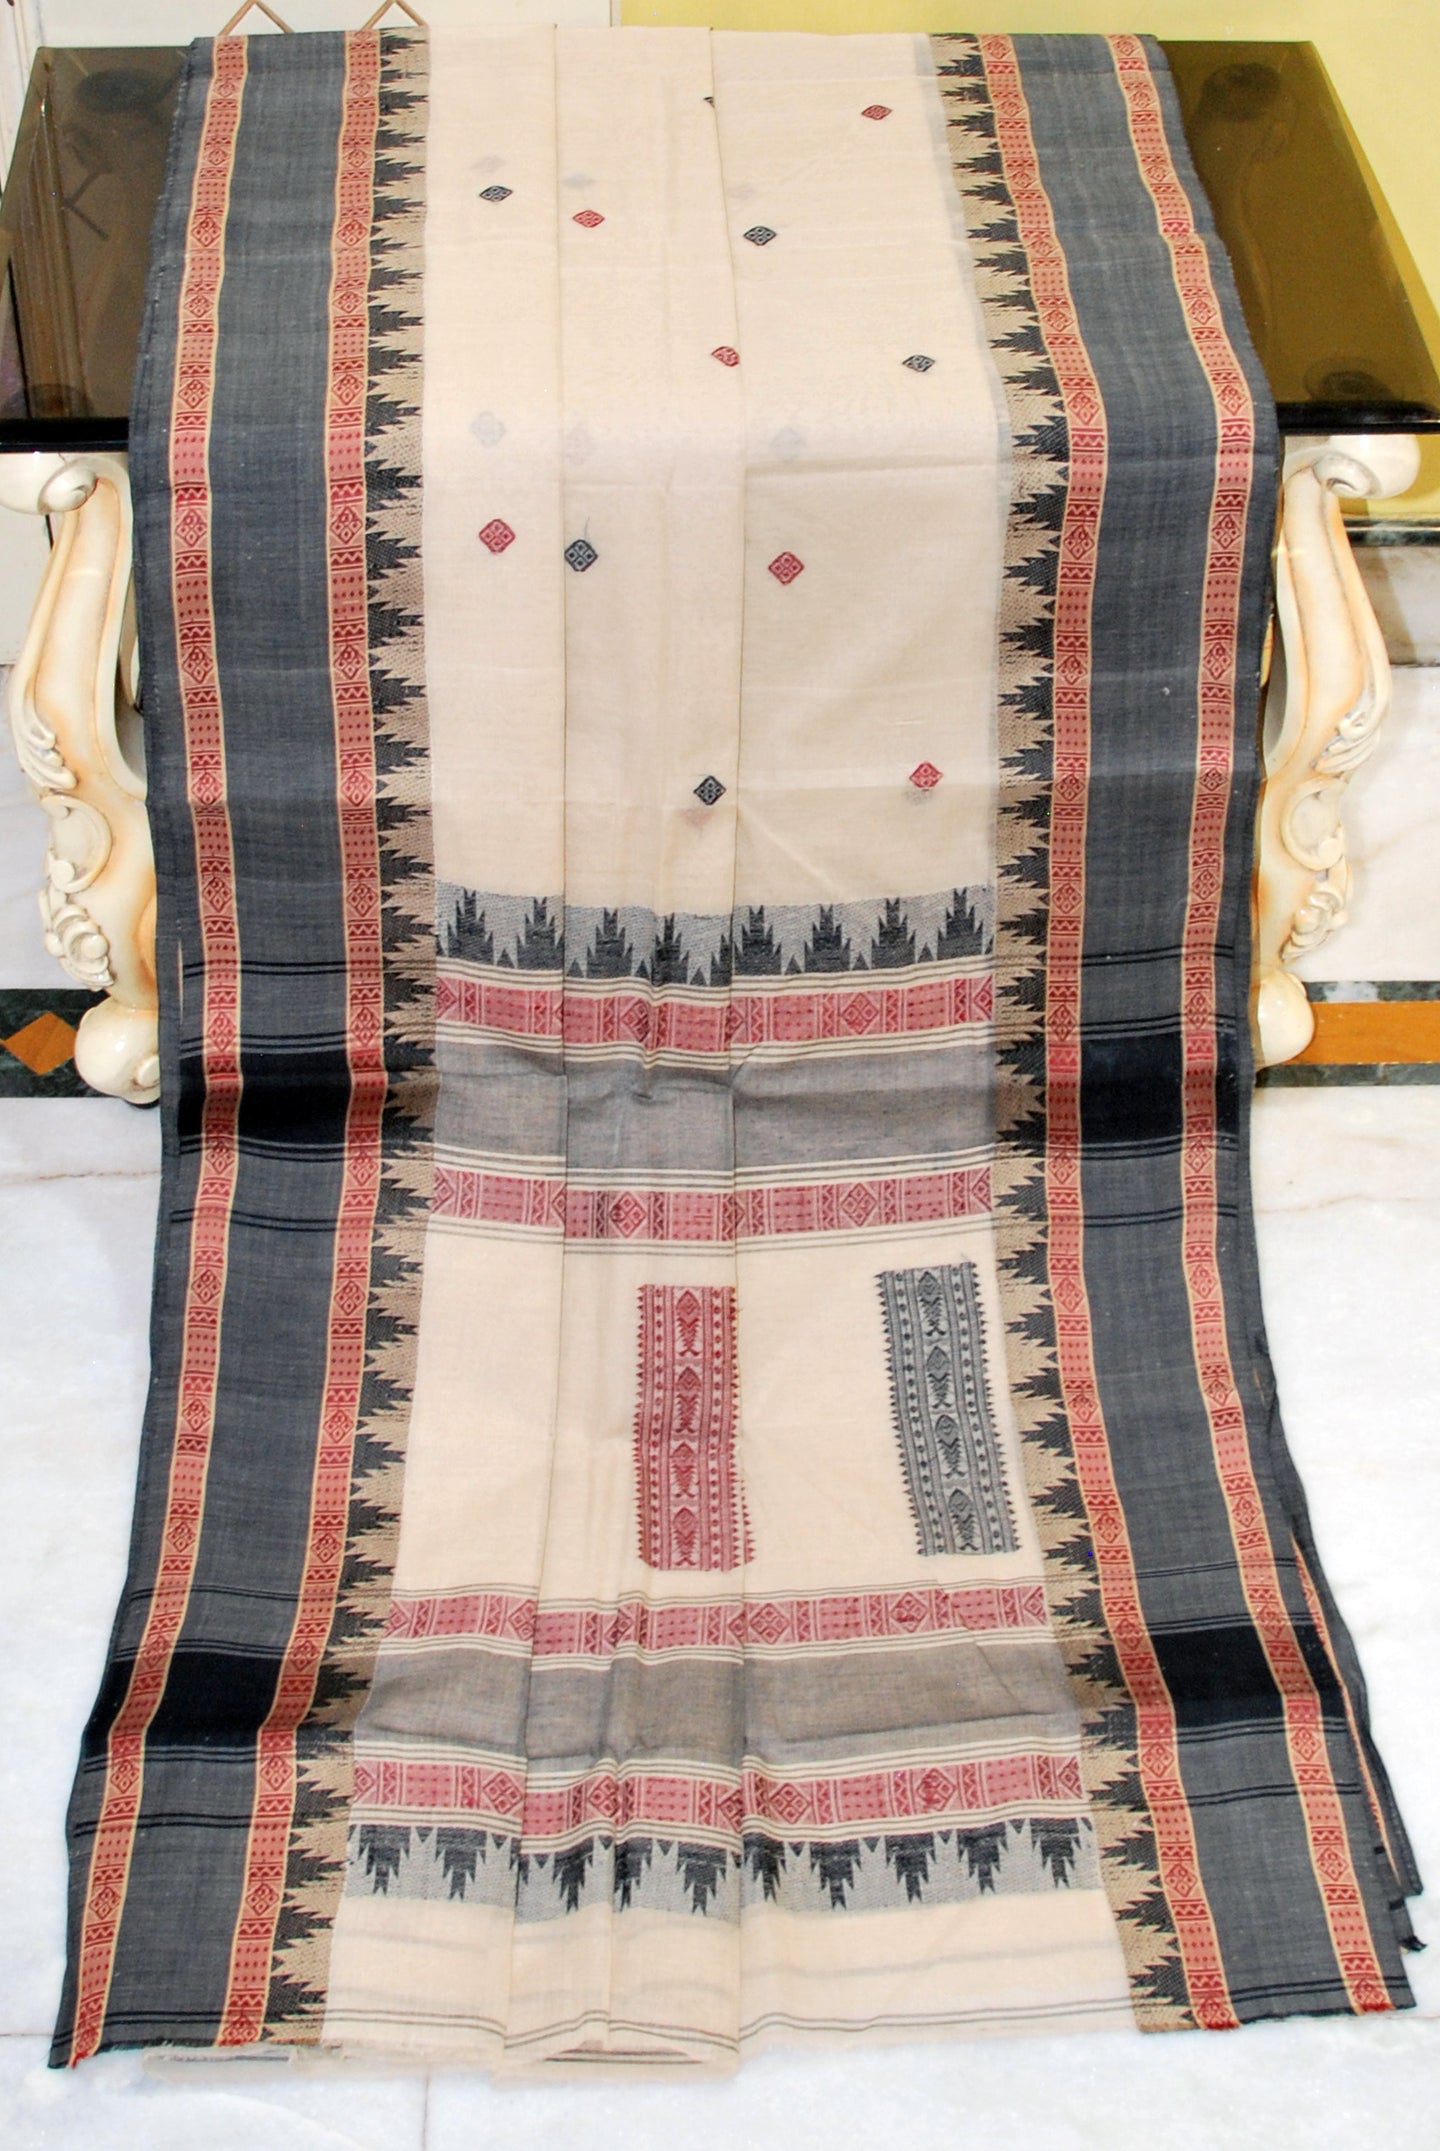 Woven Matta Nakshi Border Premium Quality Bengal Handloom Cotton Saree in Light Beige, Black and Maroon